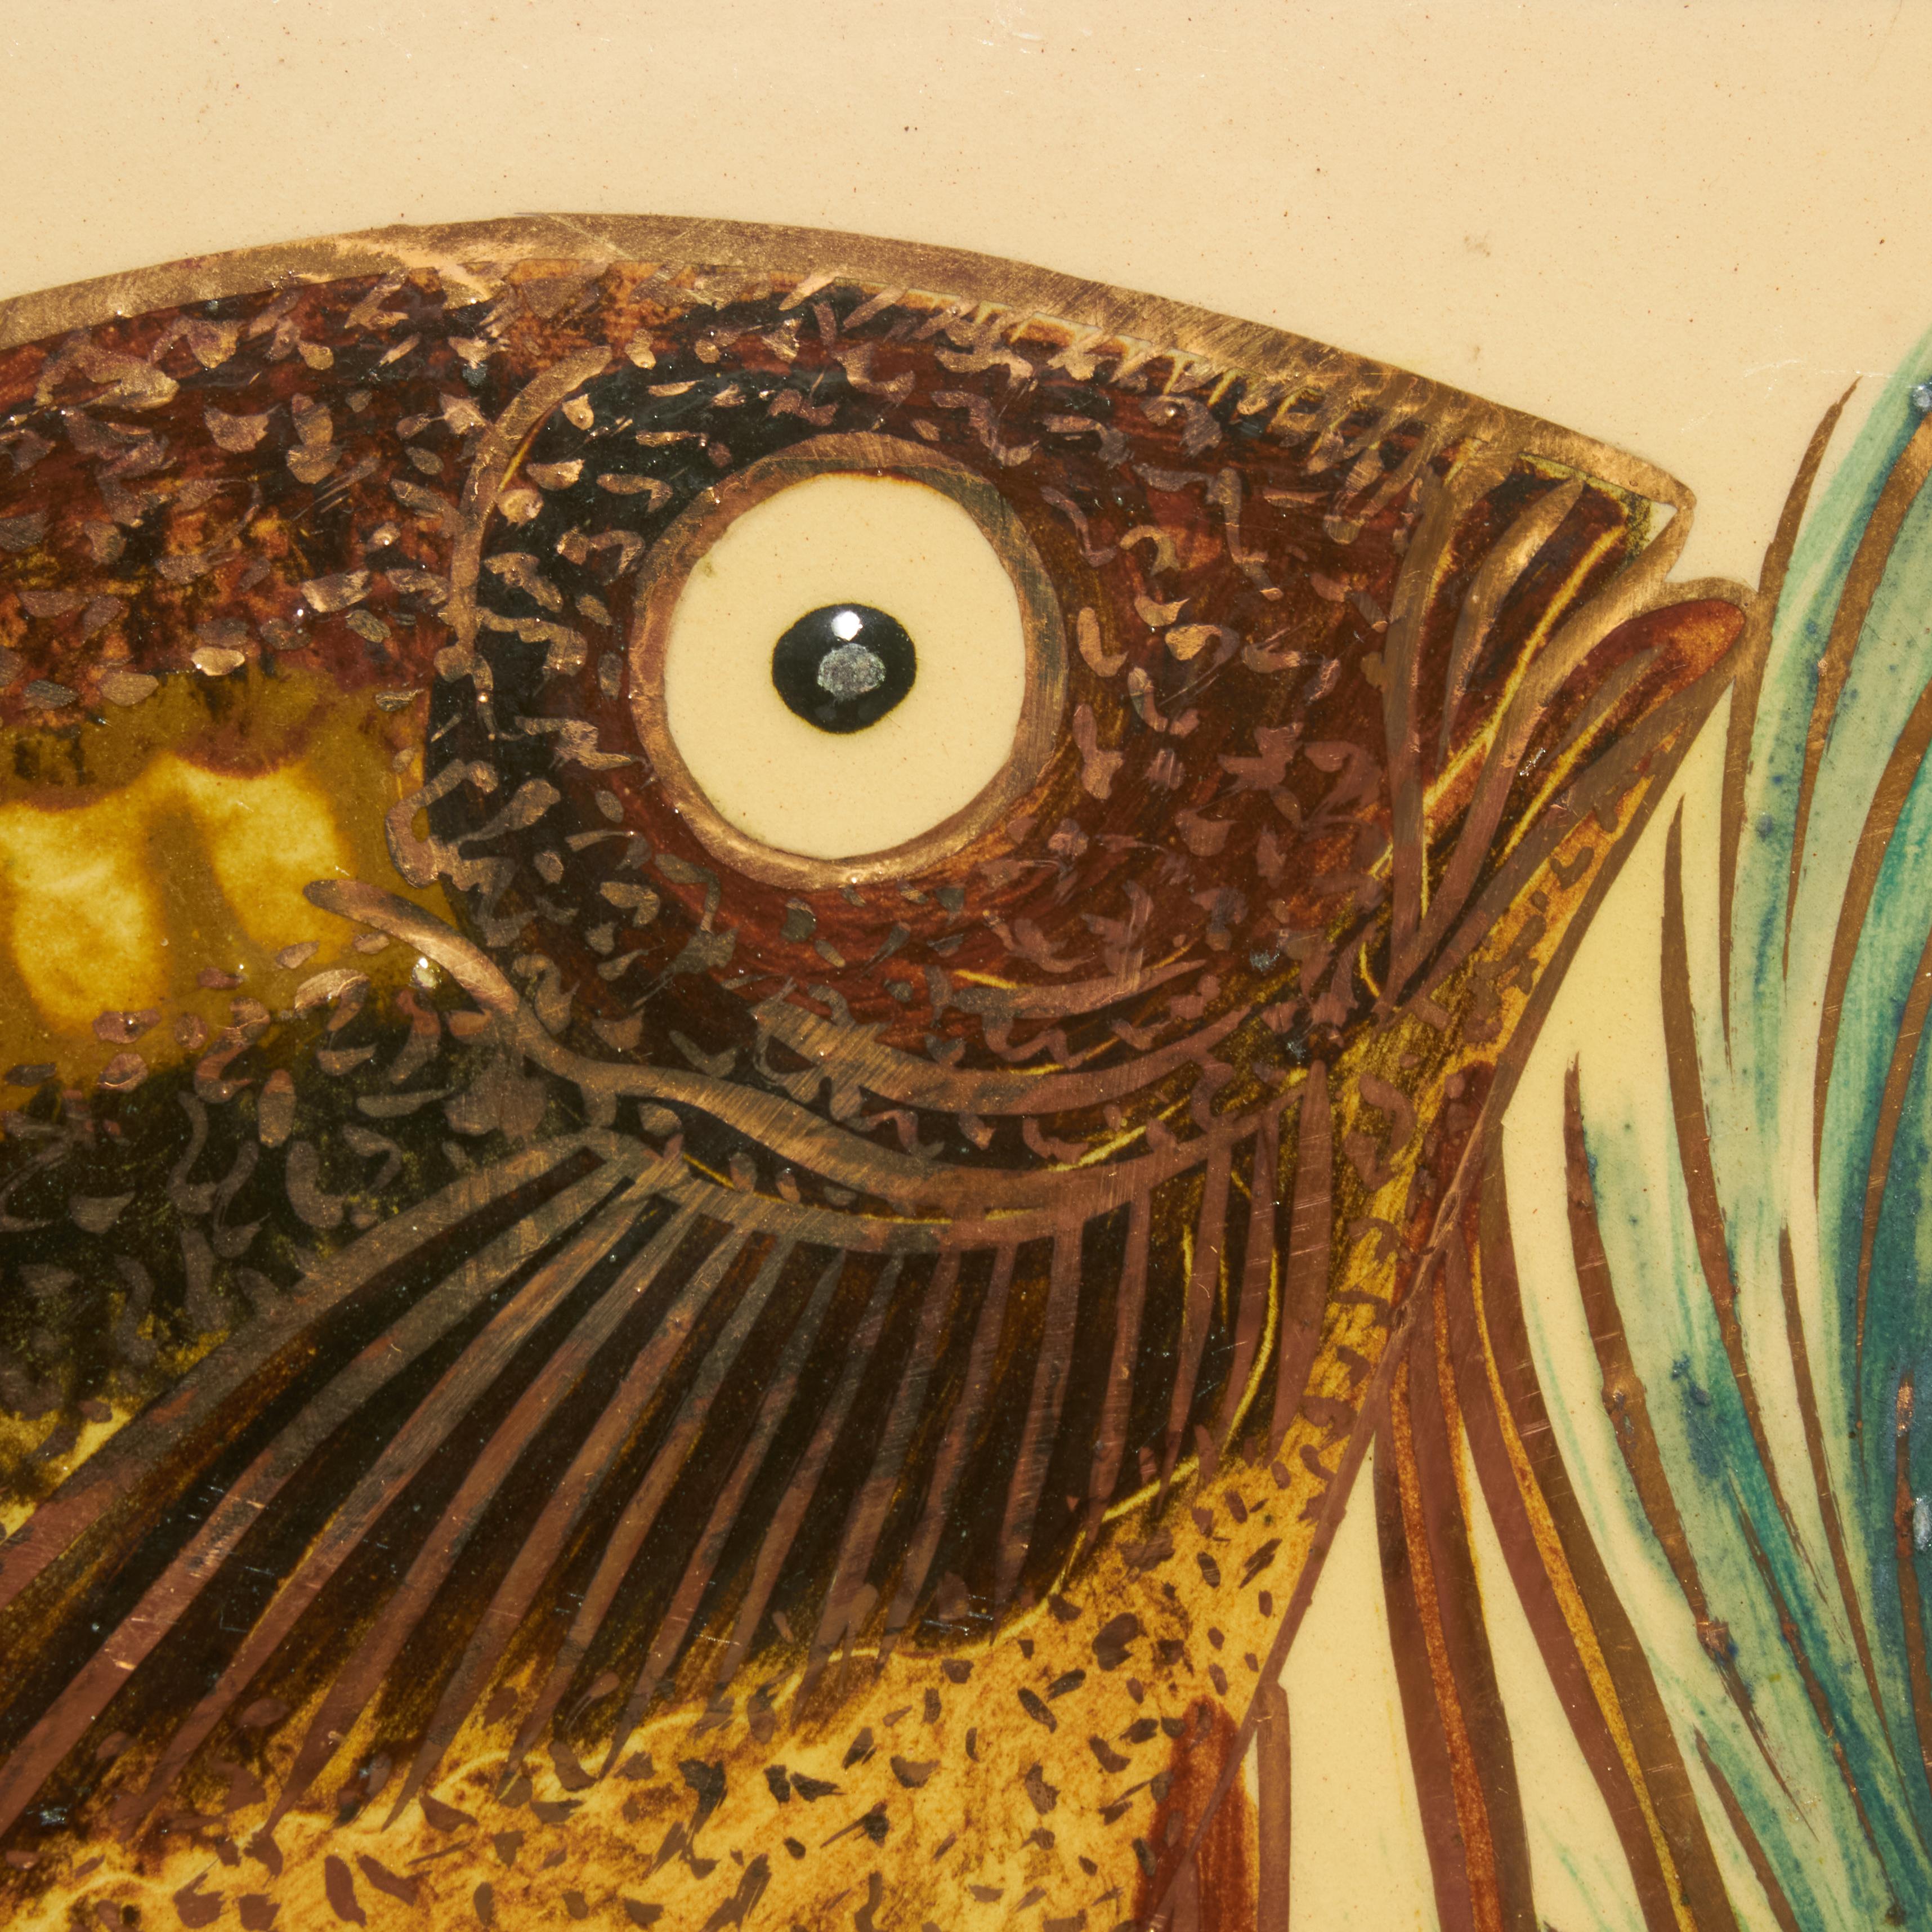 Glazed Vintage 1960 Hand-Painted Ceramic Gold Fish Artwork by Catalan Artist Diaz Costa